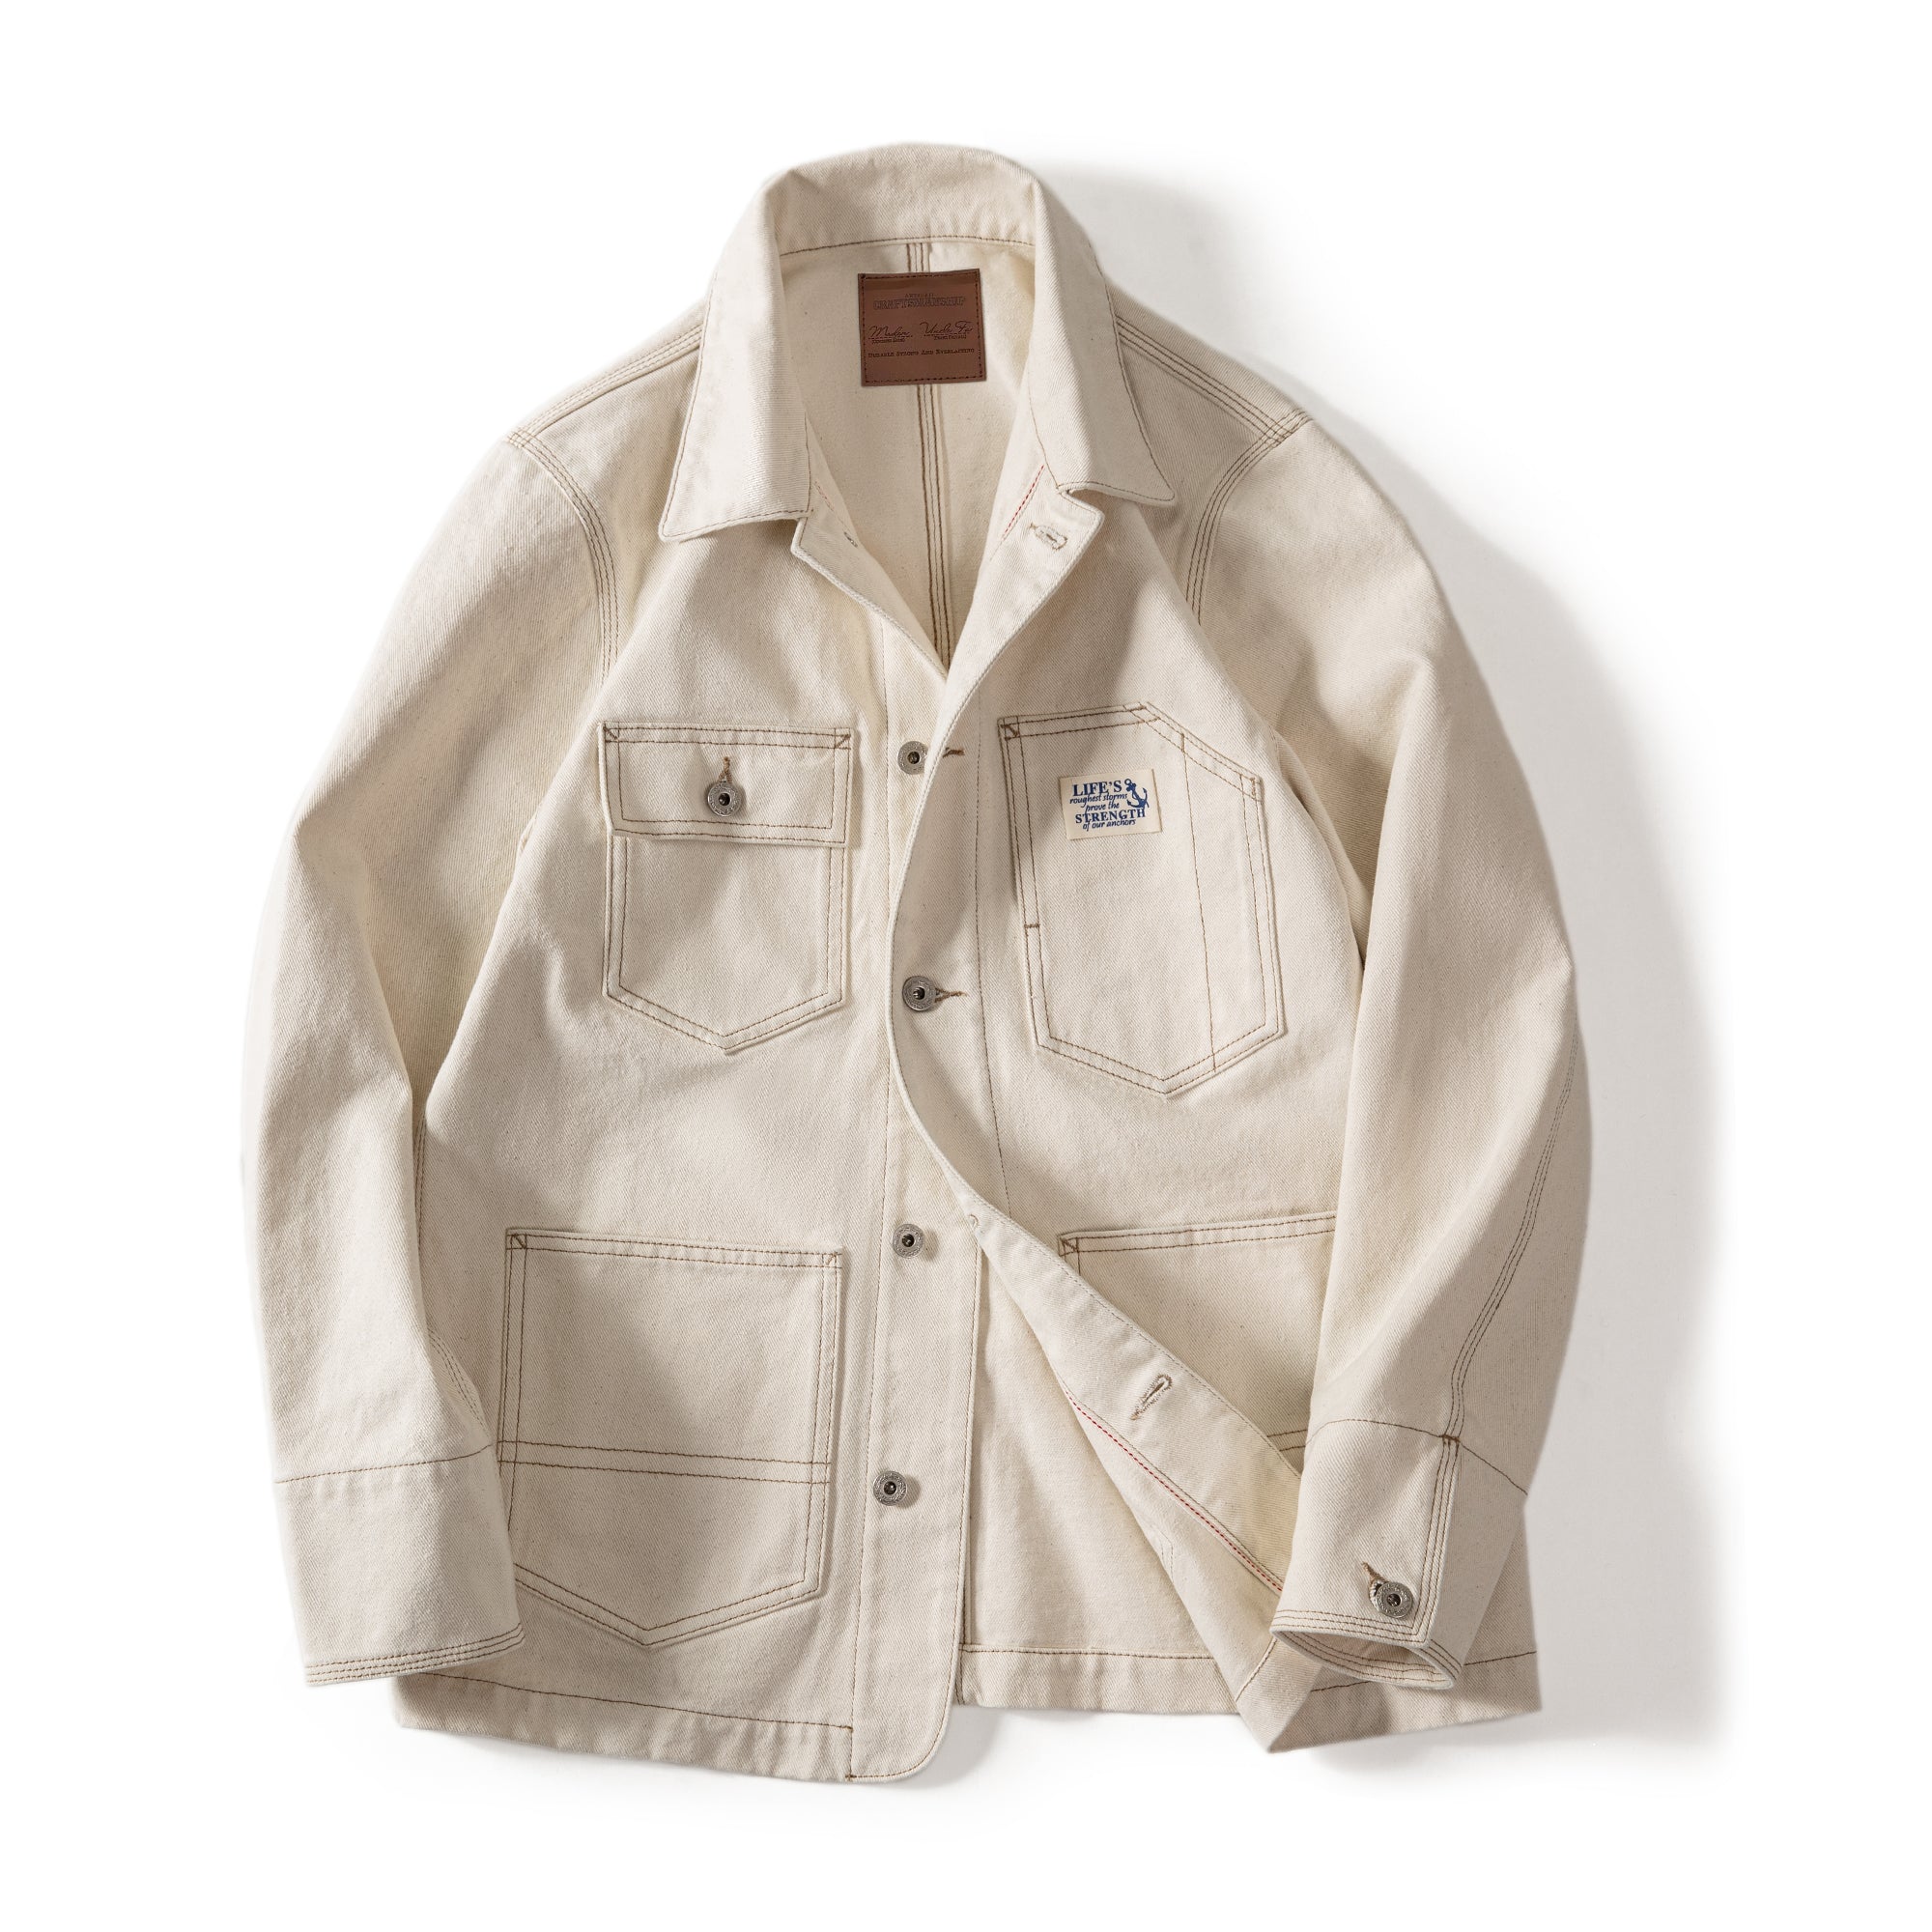 American Retro Cotton Seed Shell Jacket Khaki Multi-Pocket Autumn